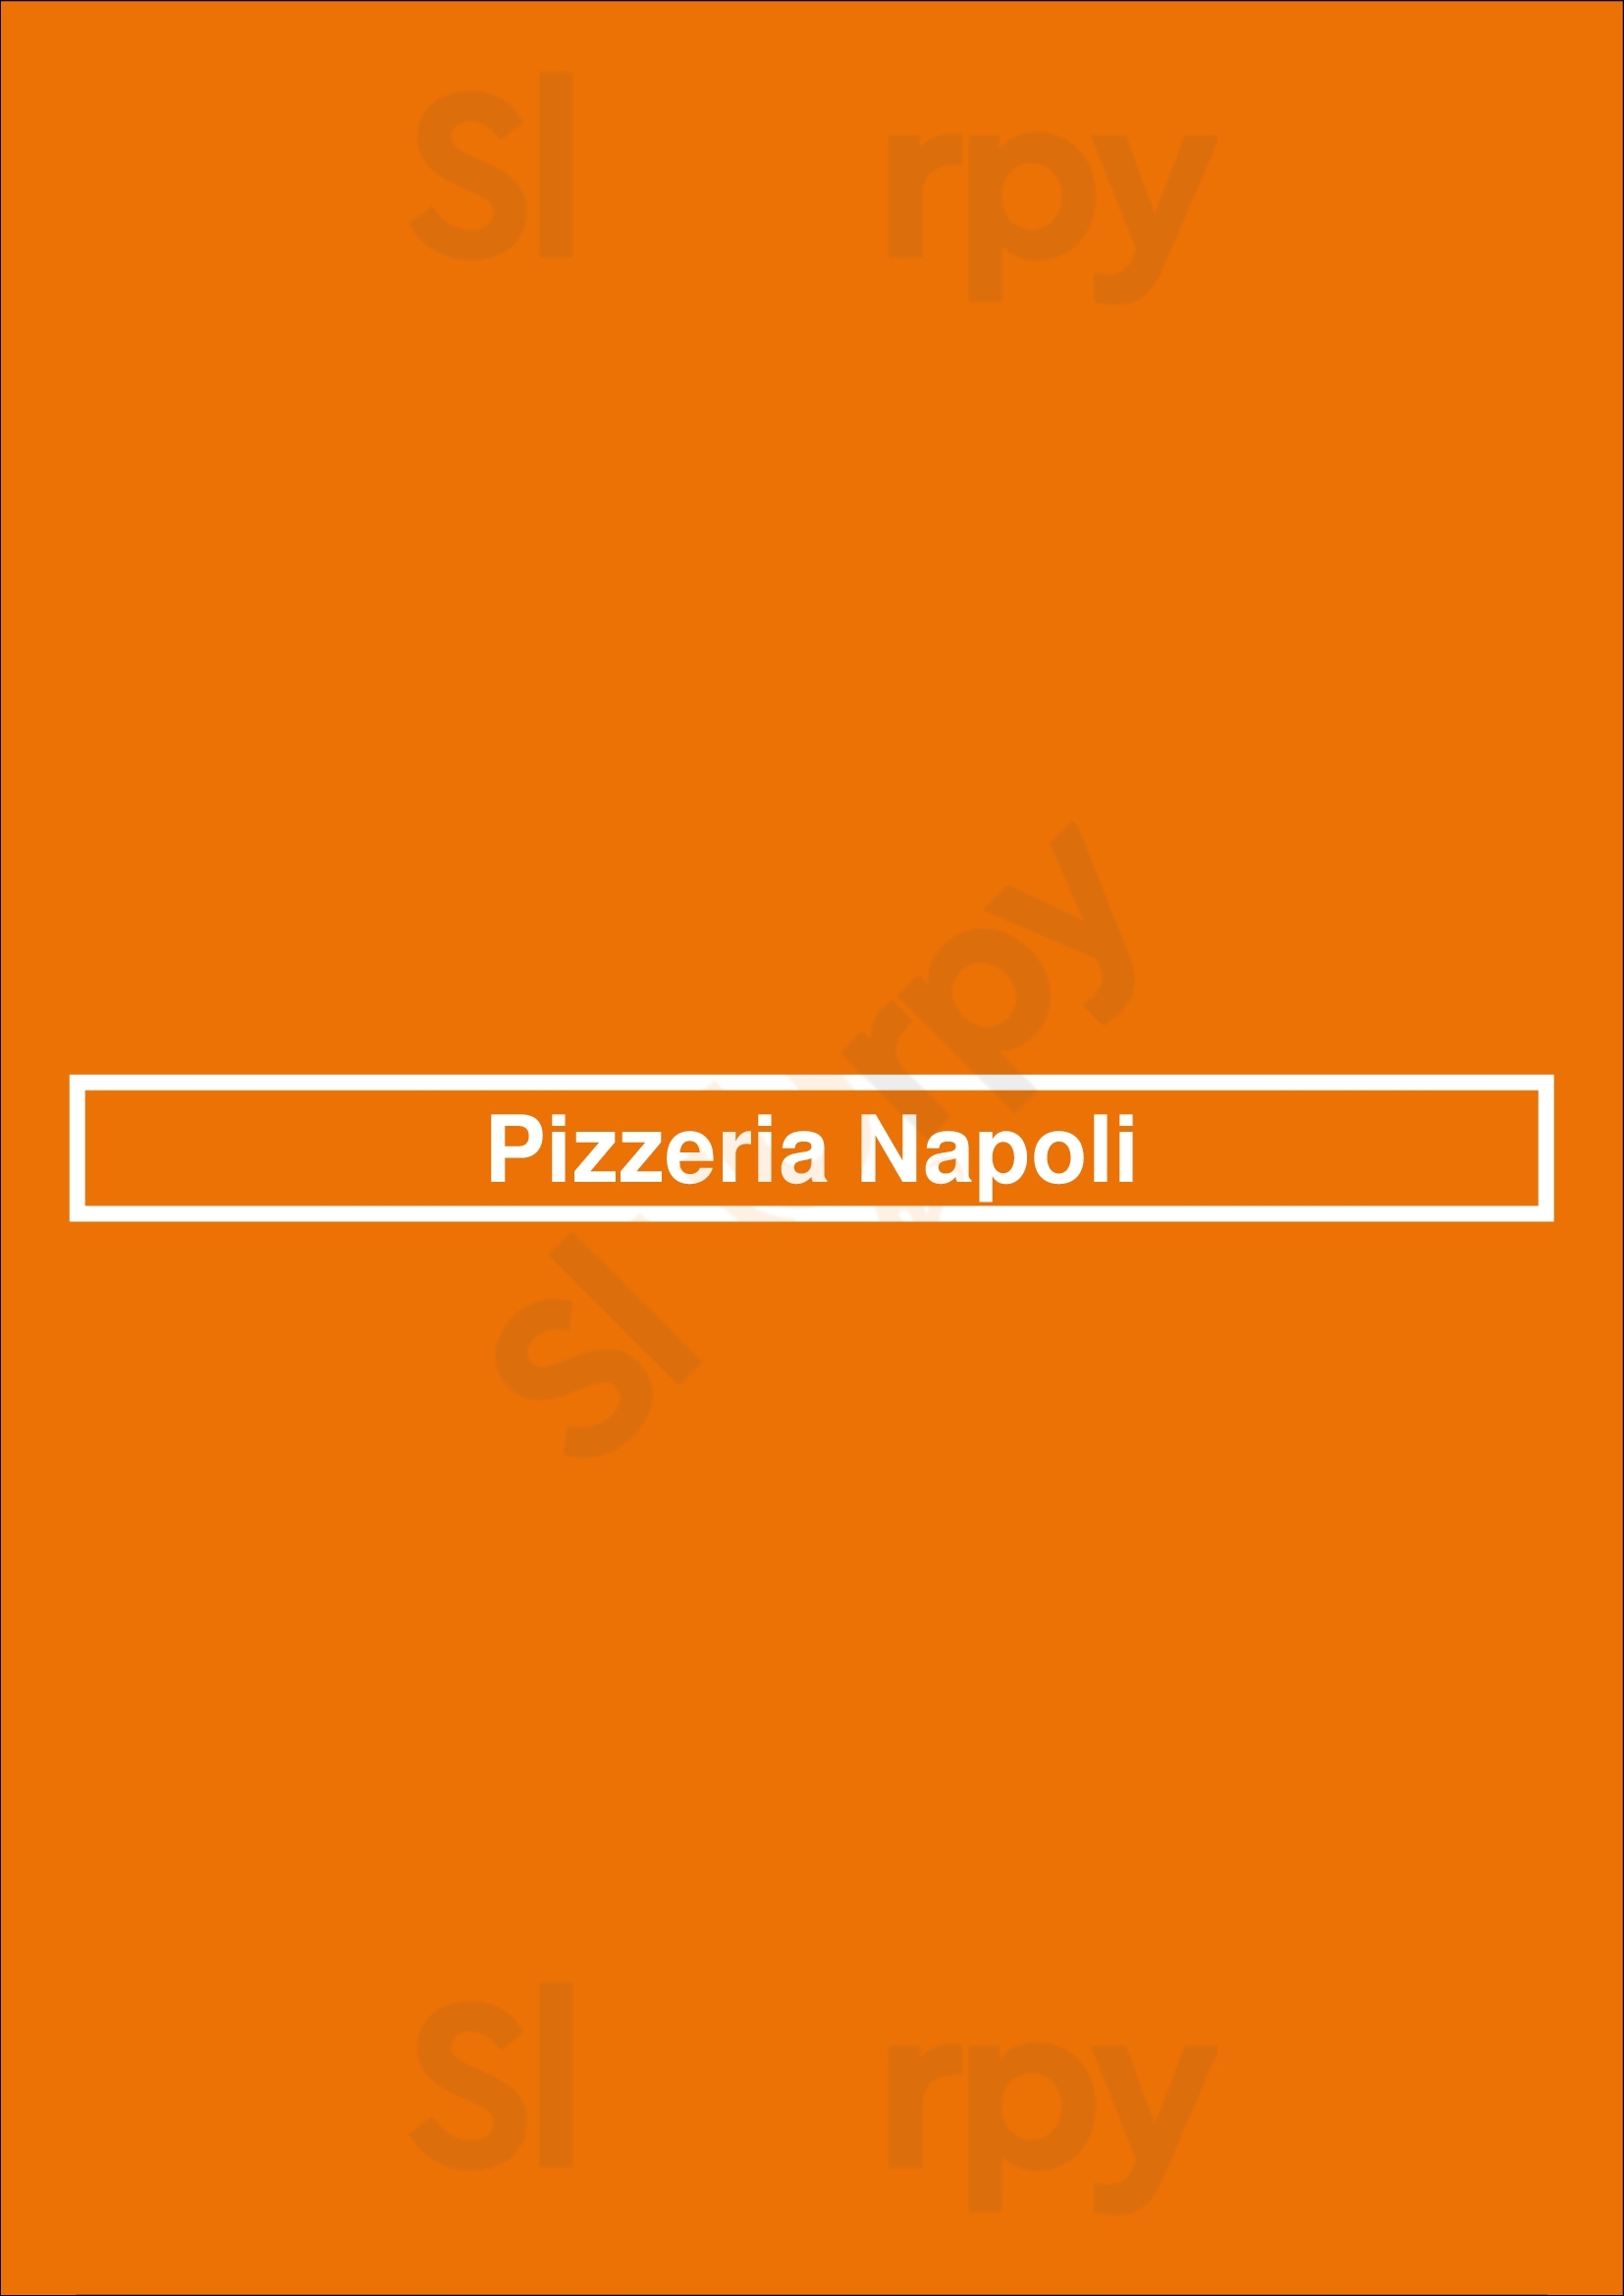 Pizzeria Napoli Huddersfield Menu - 1